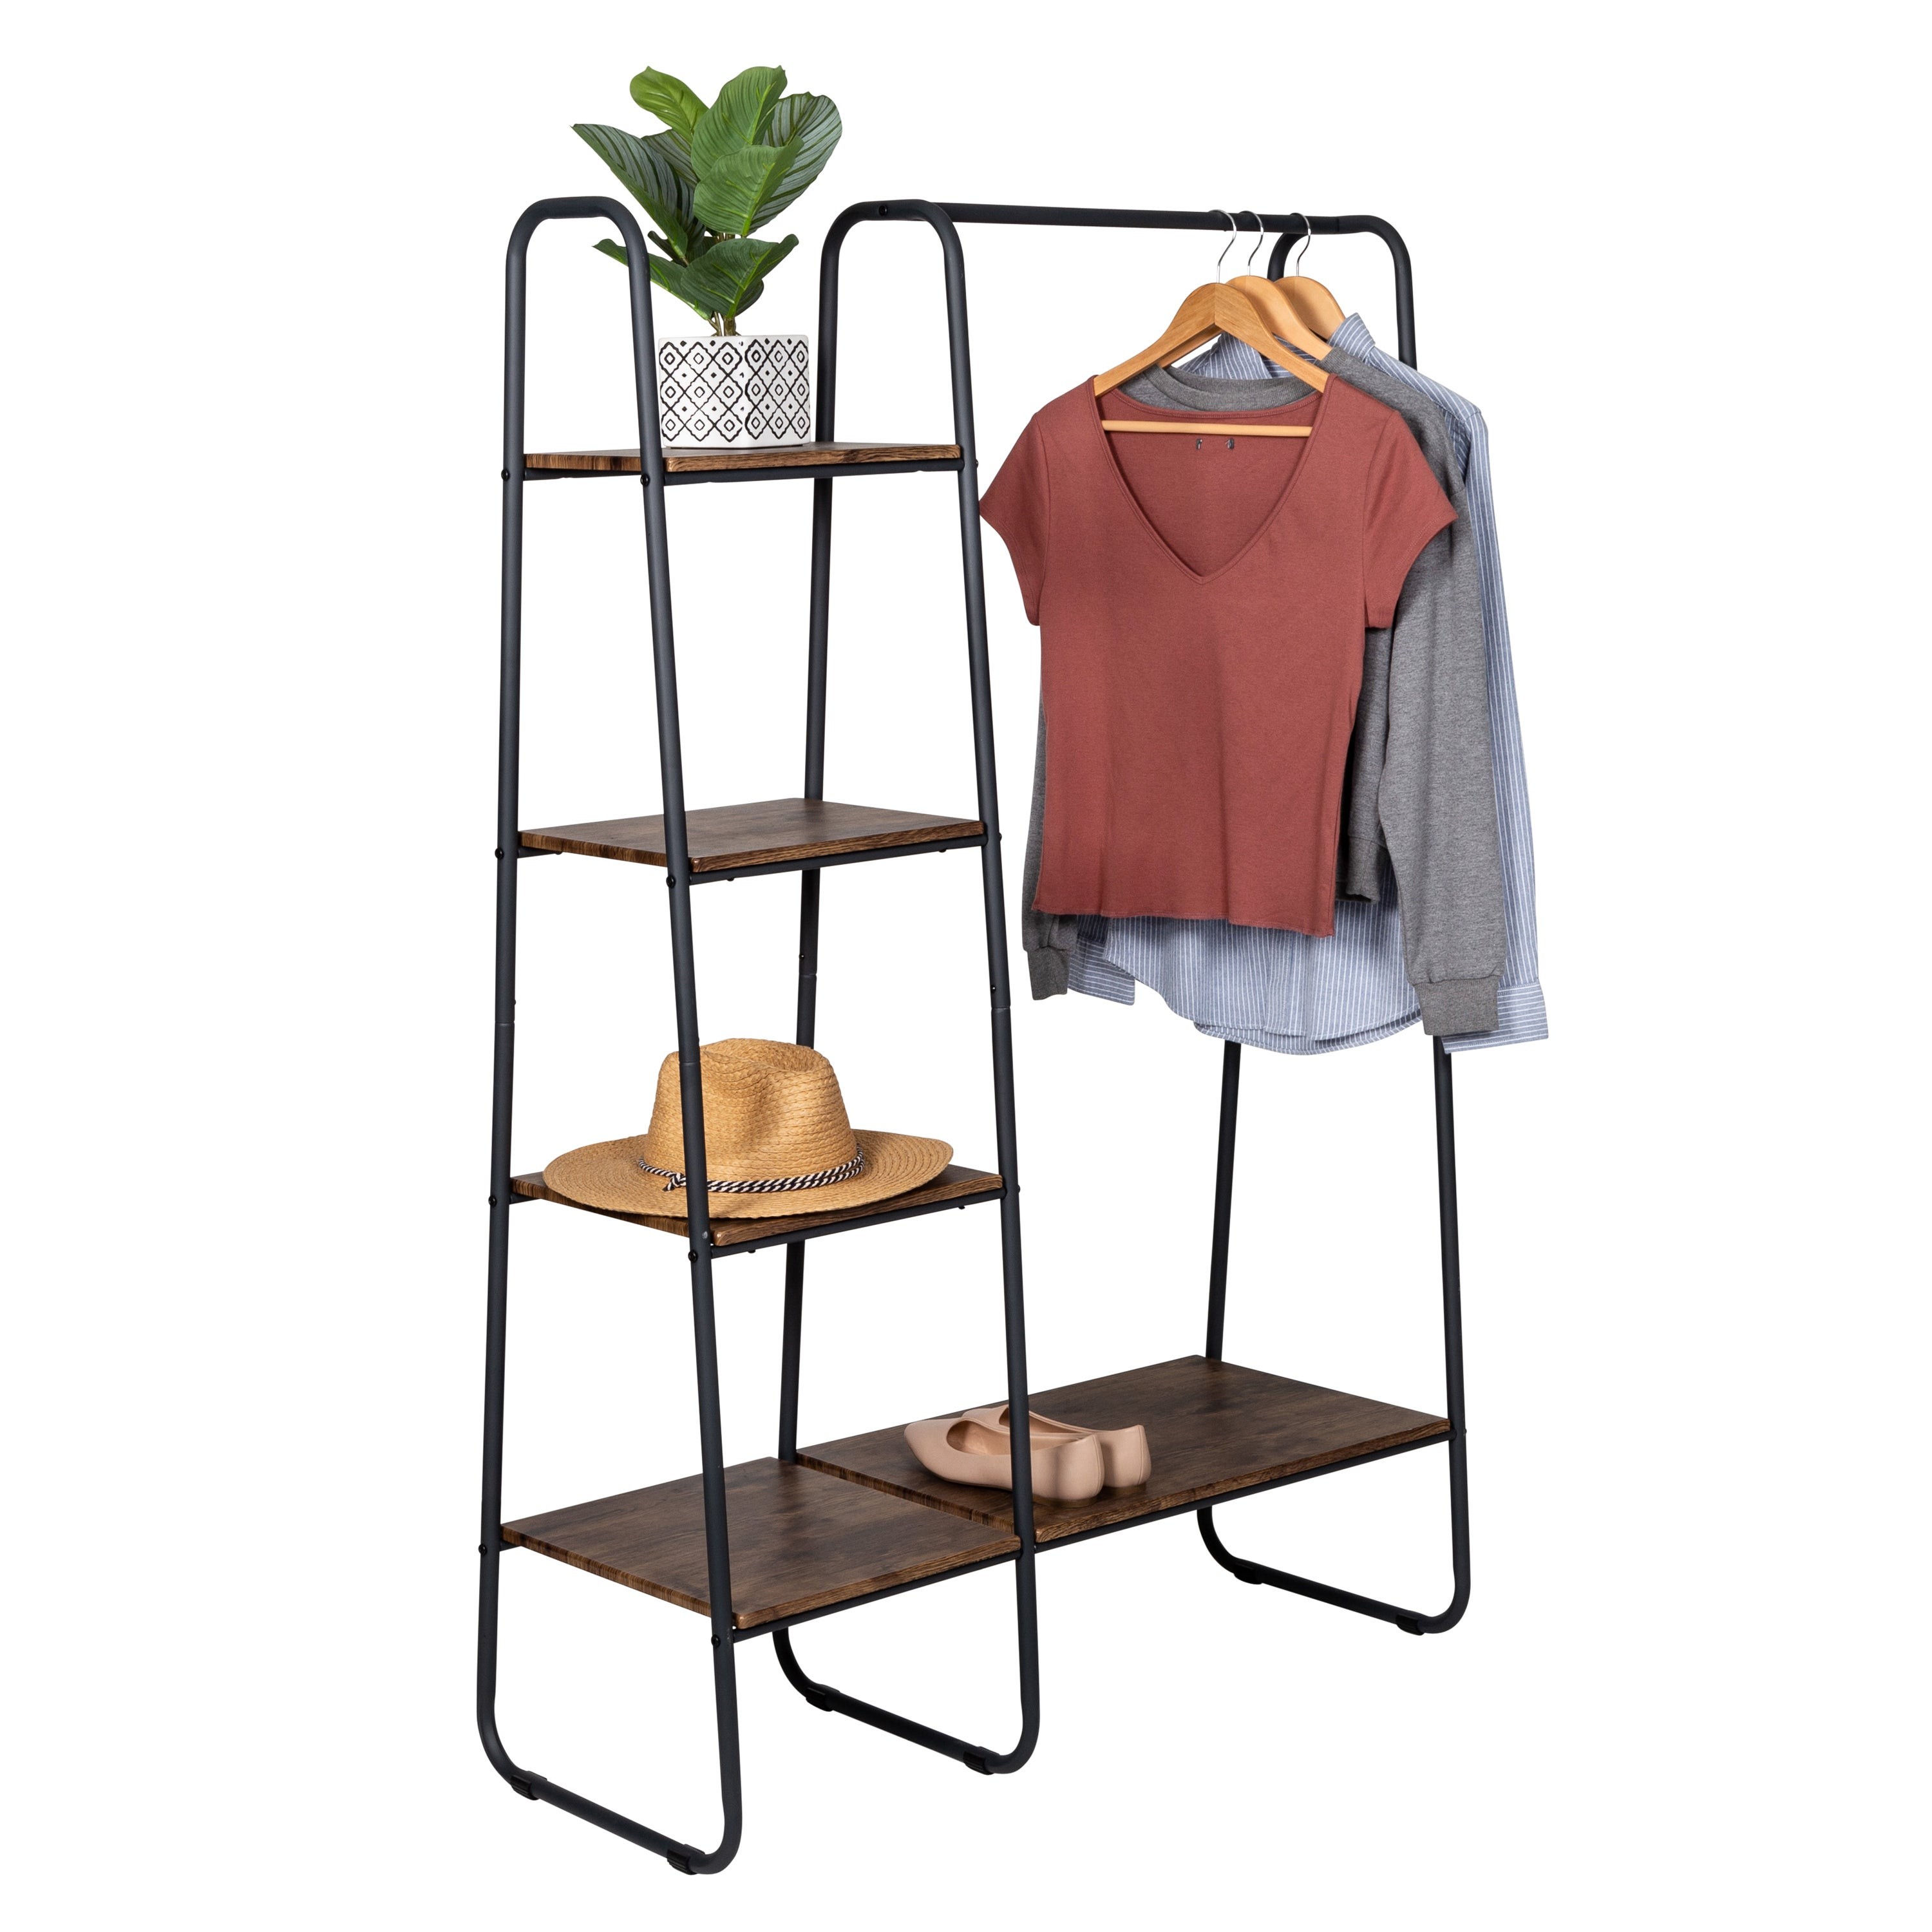 Freestanding Metal Clothing Rack w/ Wood Shelves Black/Natural